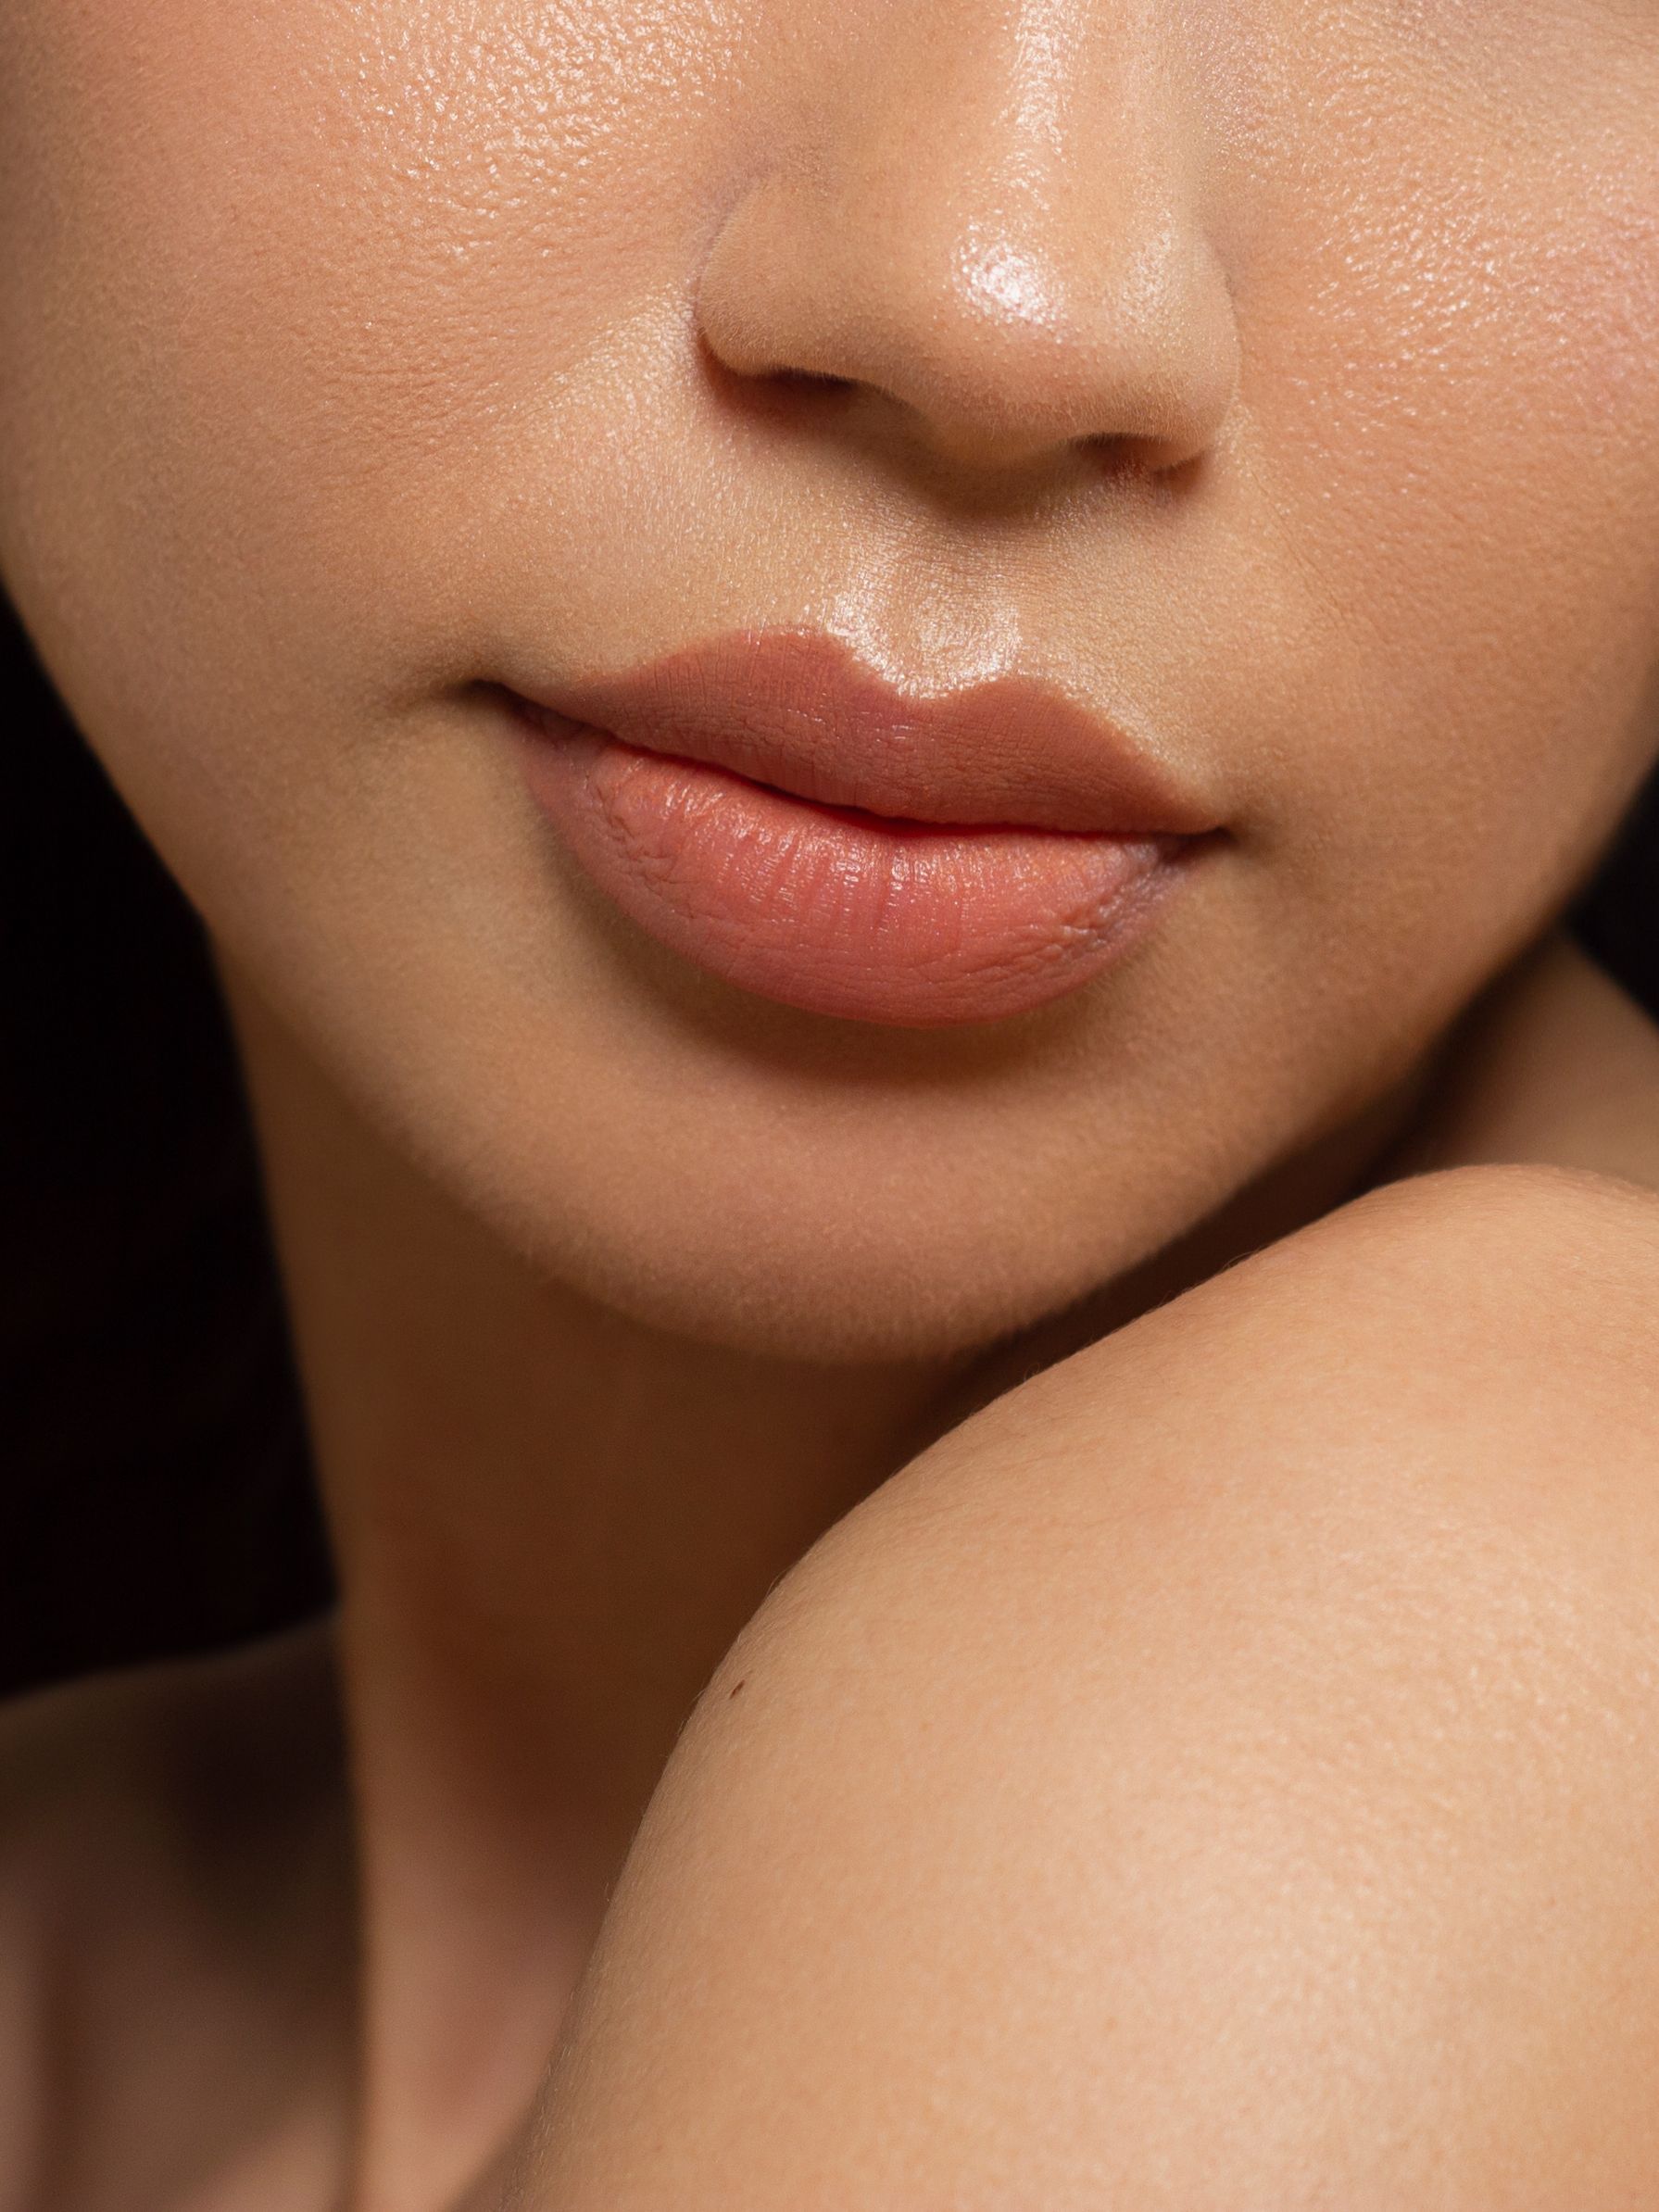 female lip augmentation treatment